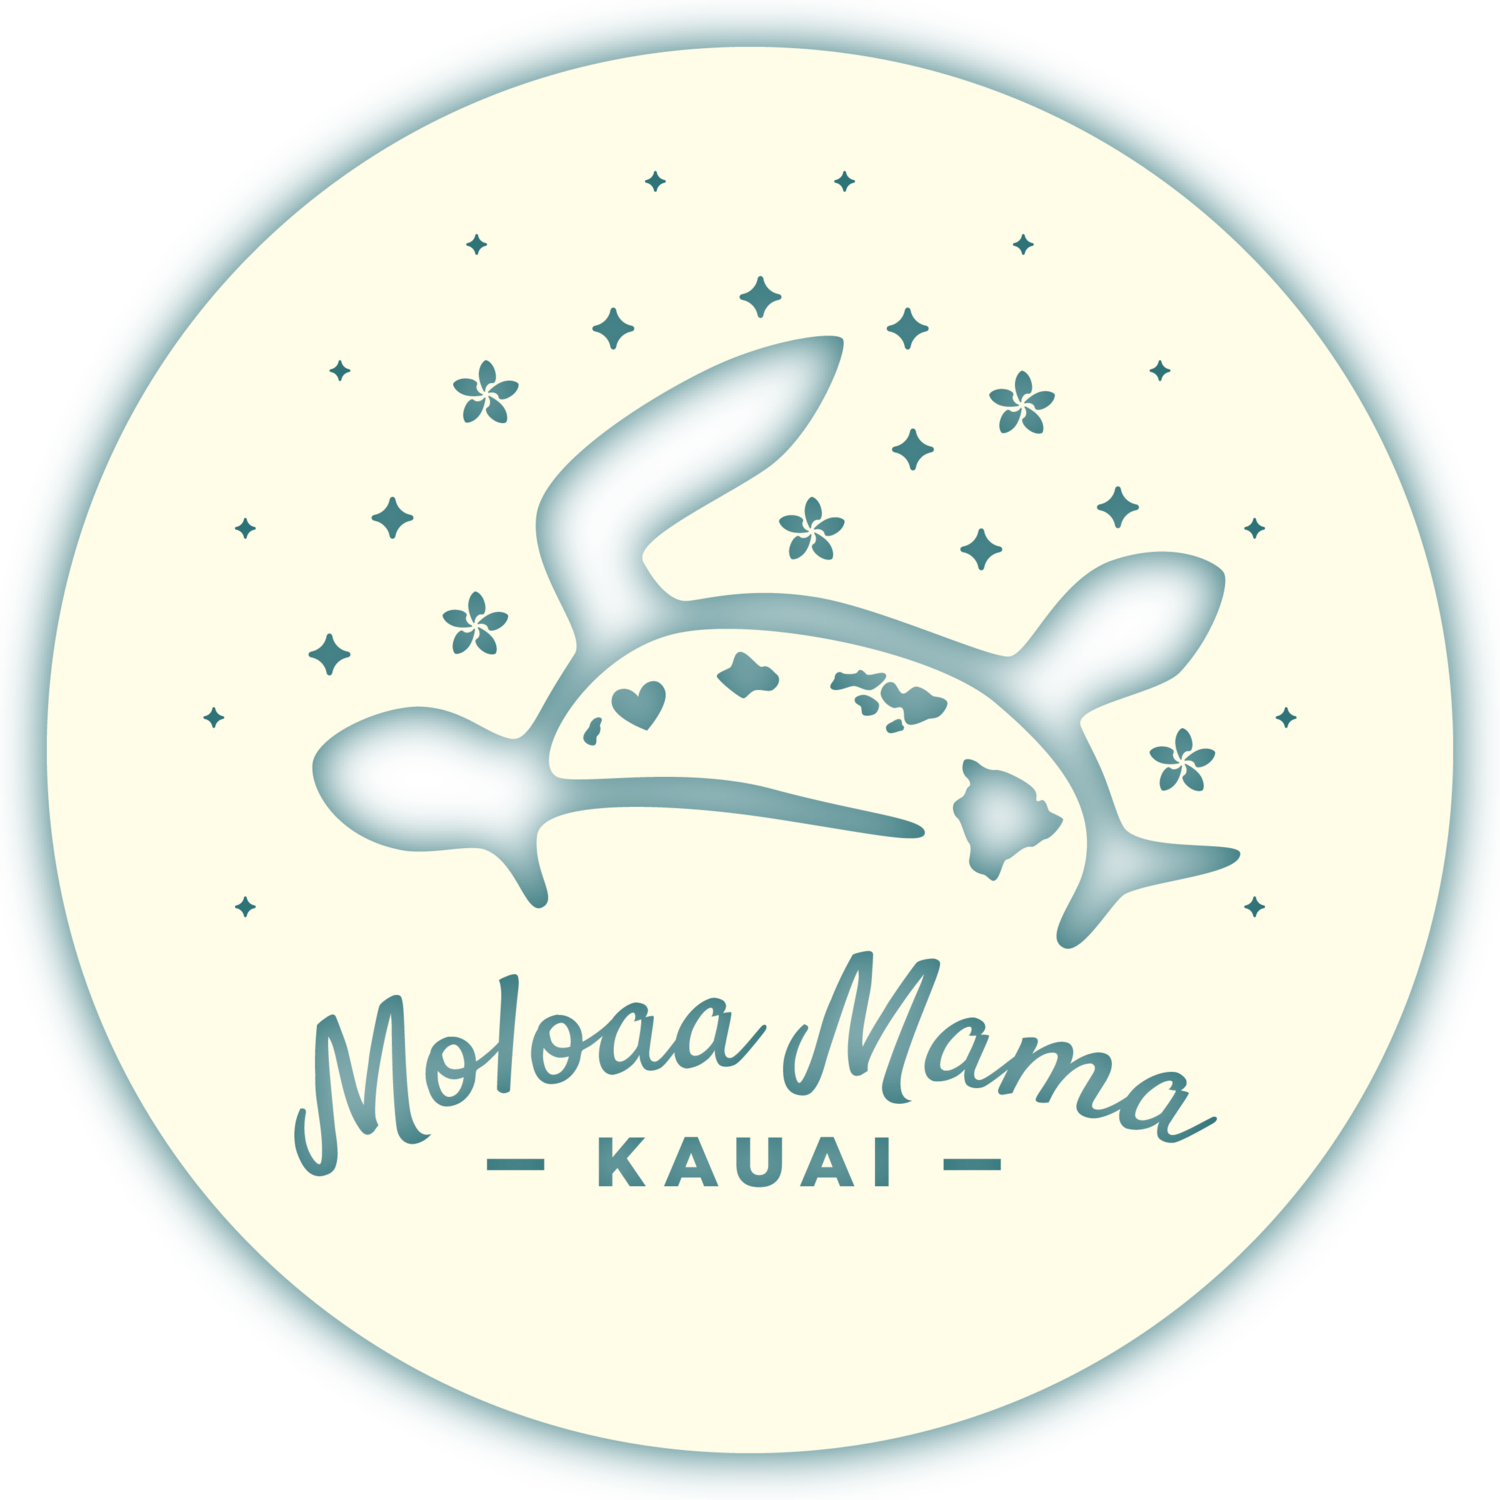 Moloaa Mama